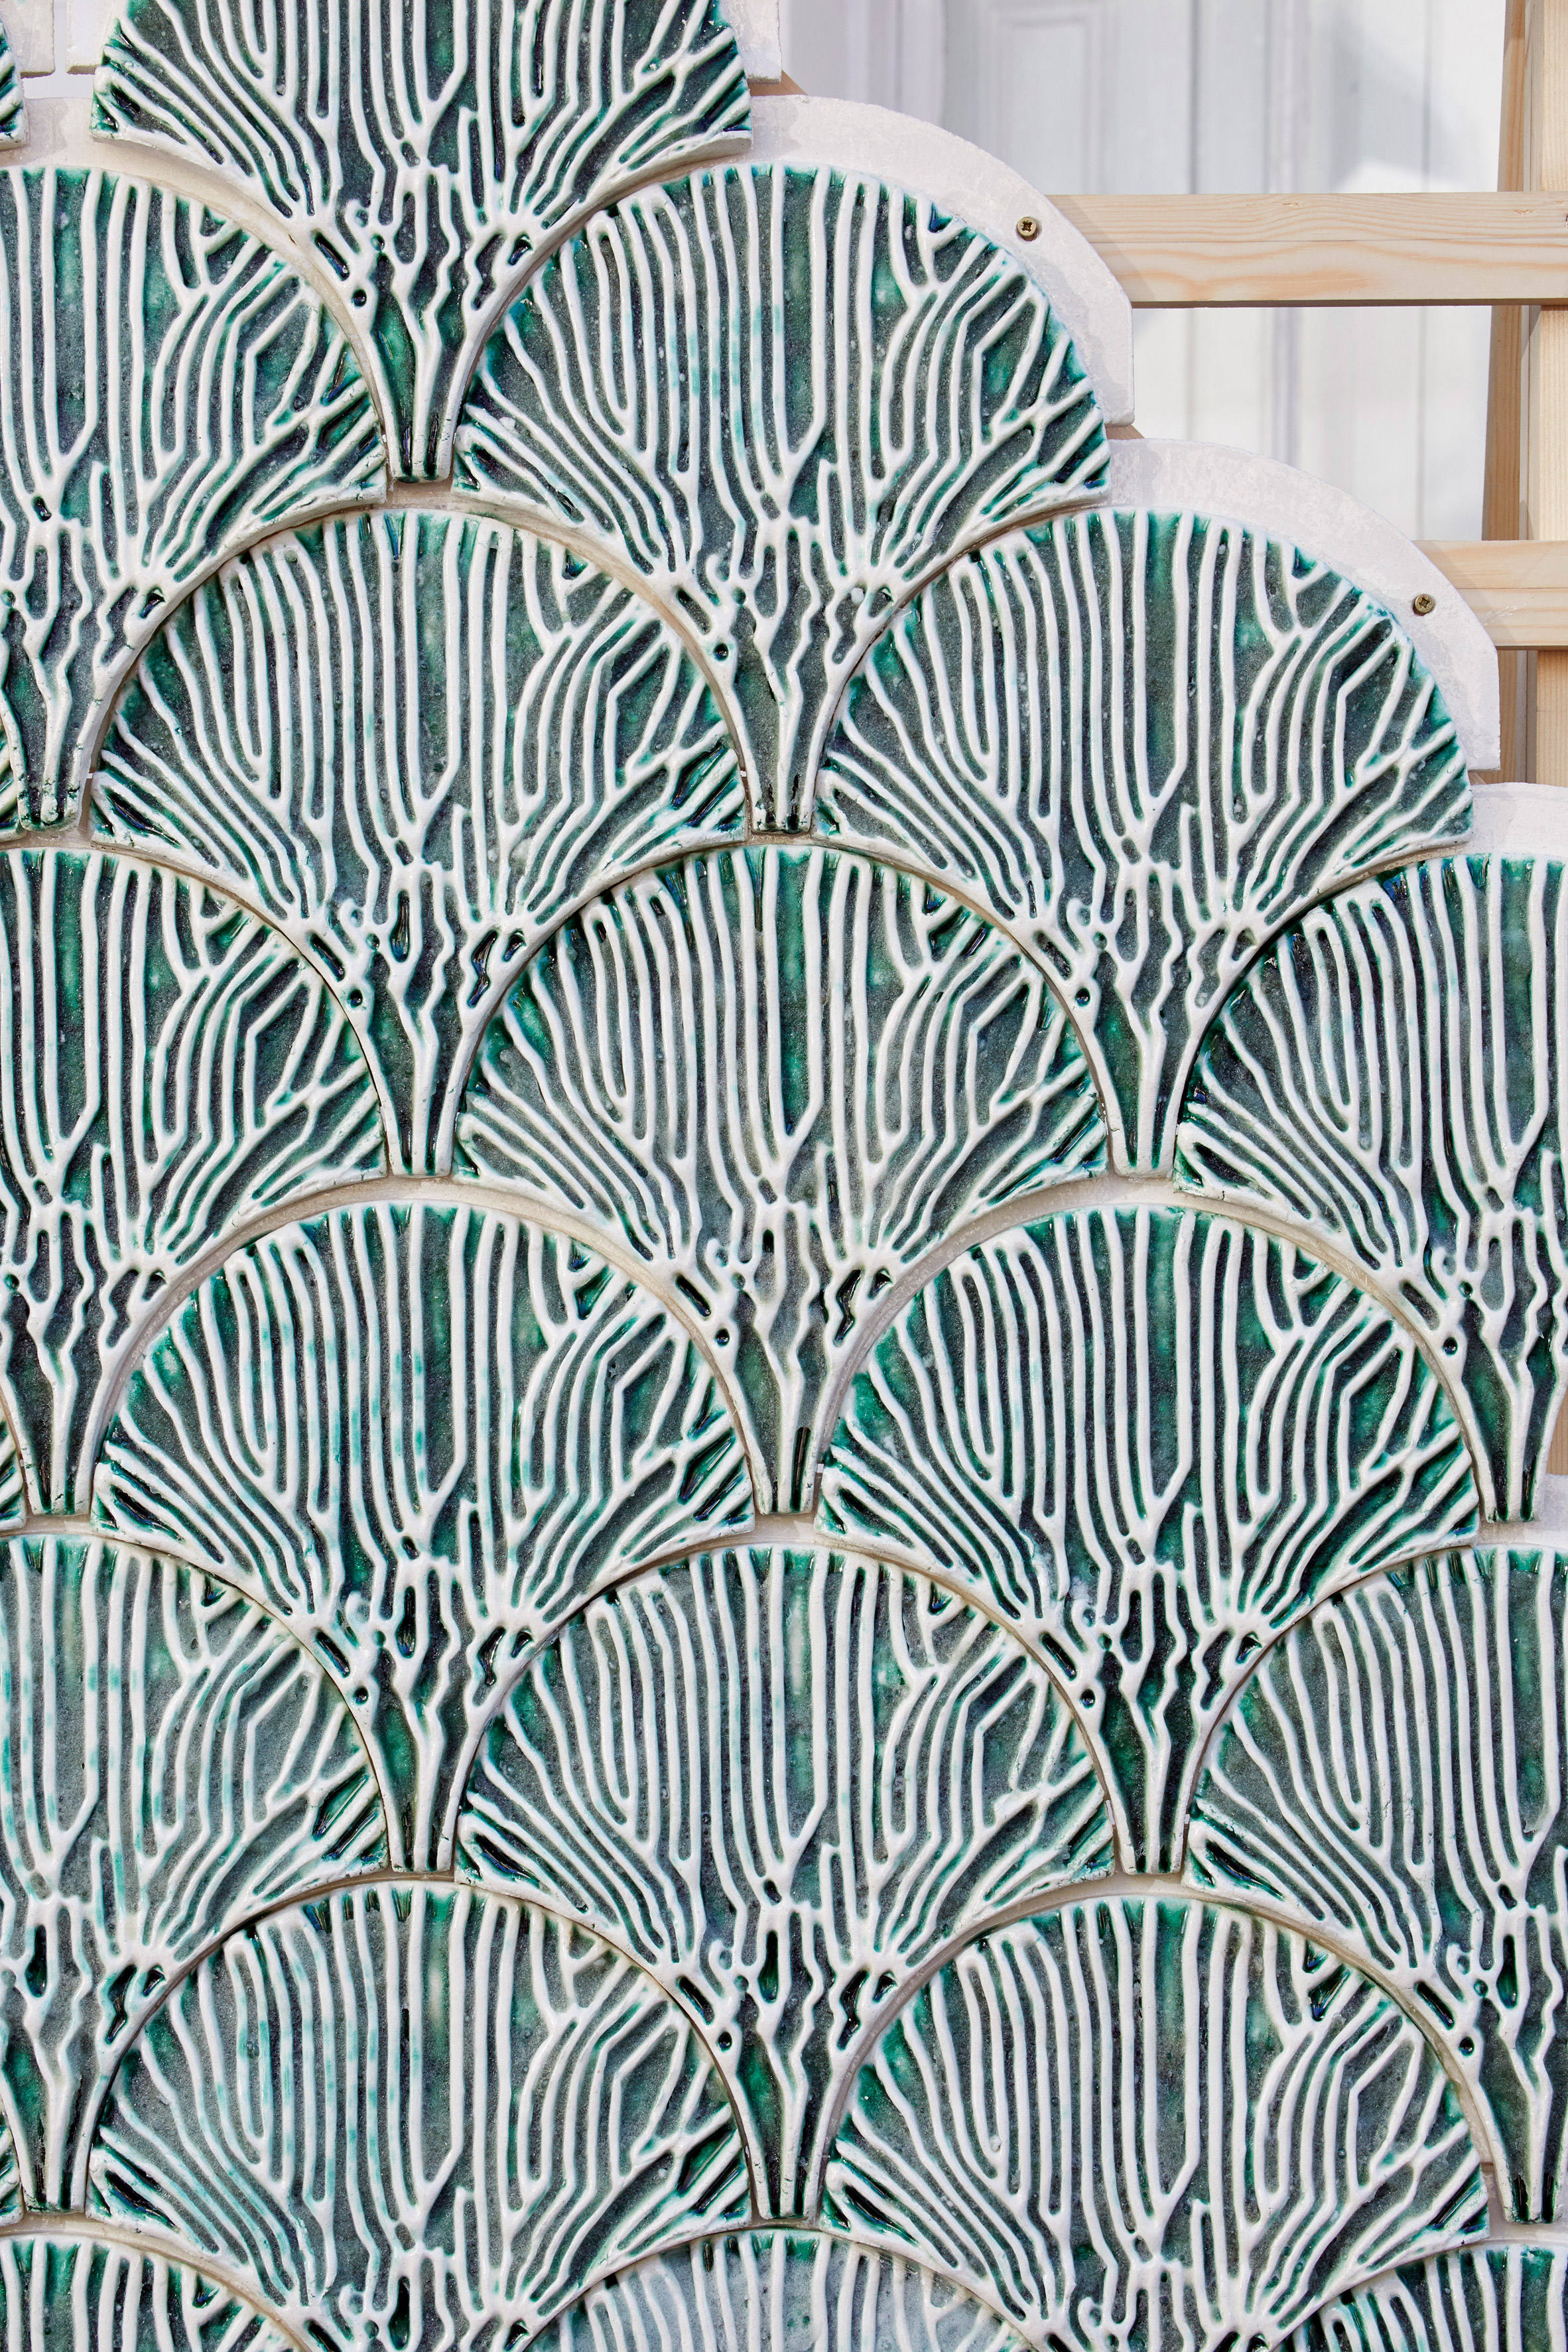 Algae tiles Indus by Bio-ID Lab at the London Design Festival 2019